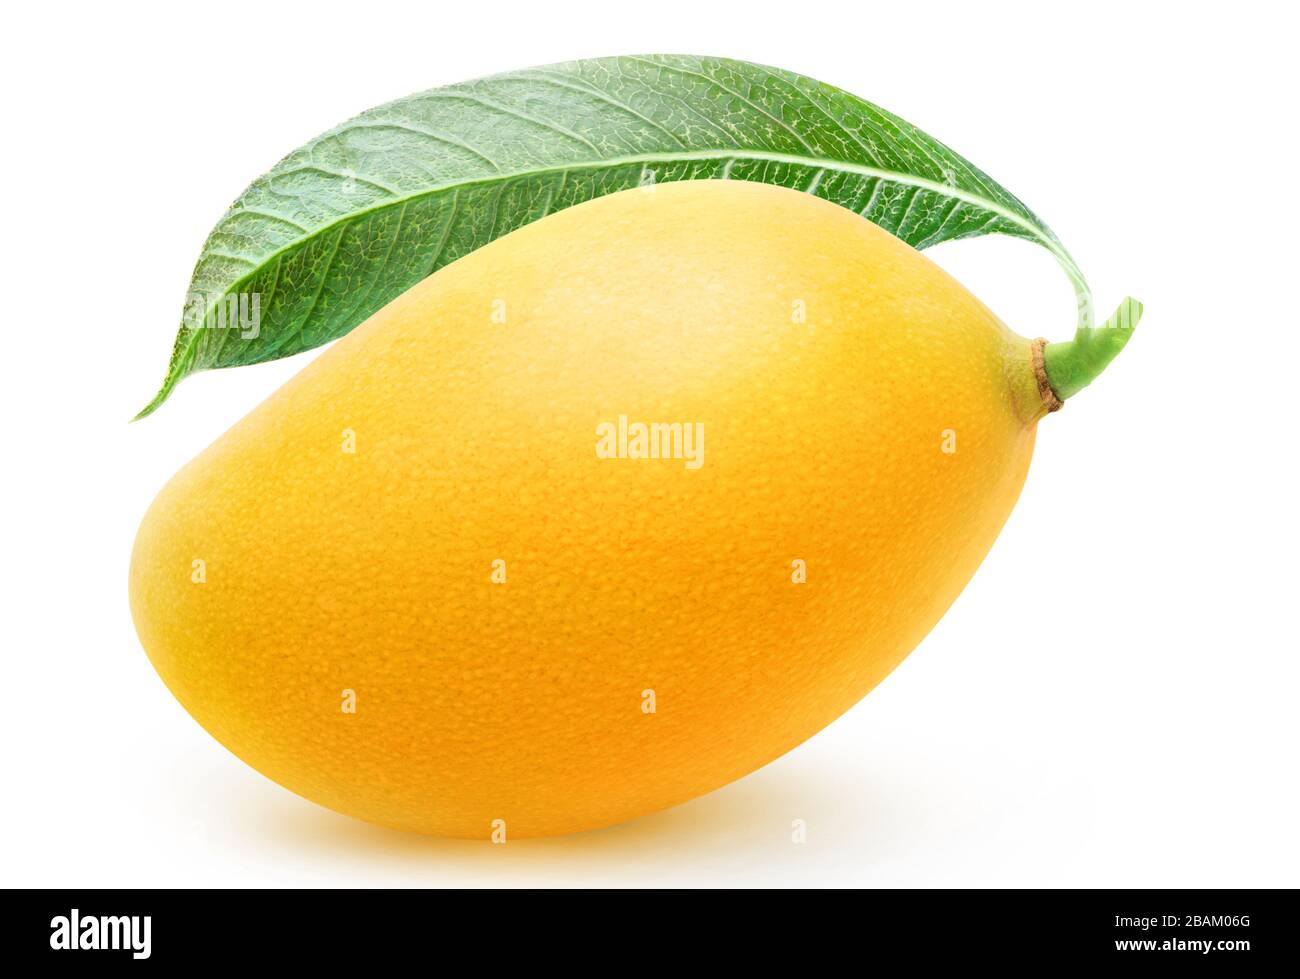 Yellow Rotten Mango Fruit Isolated on Wooden Stock Image - Image of drink,  illness: 81467139